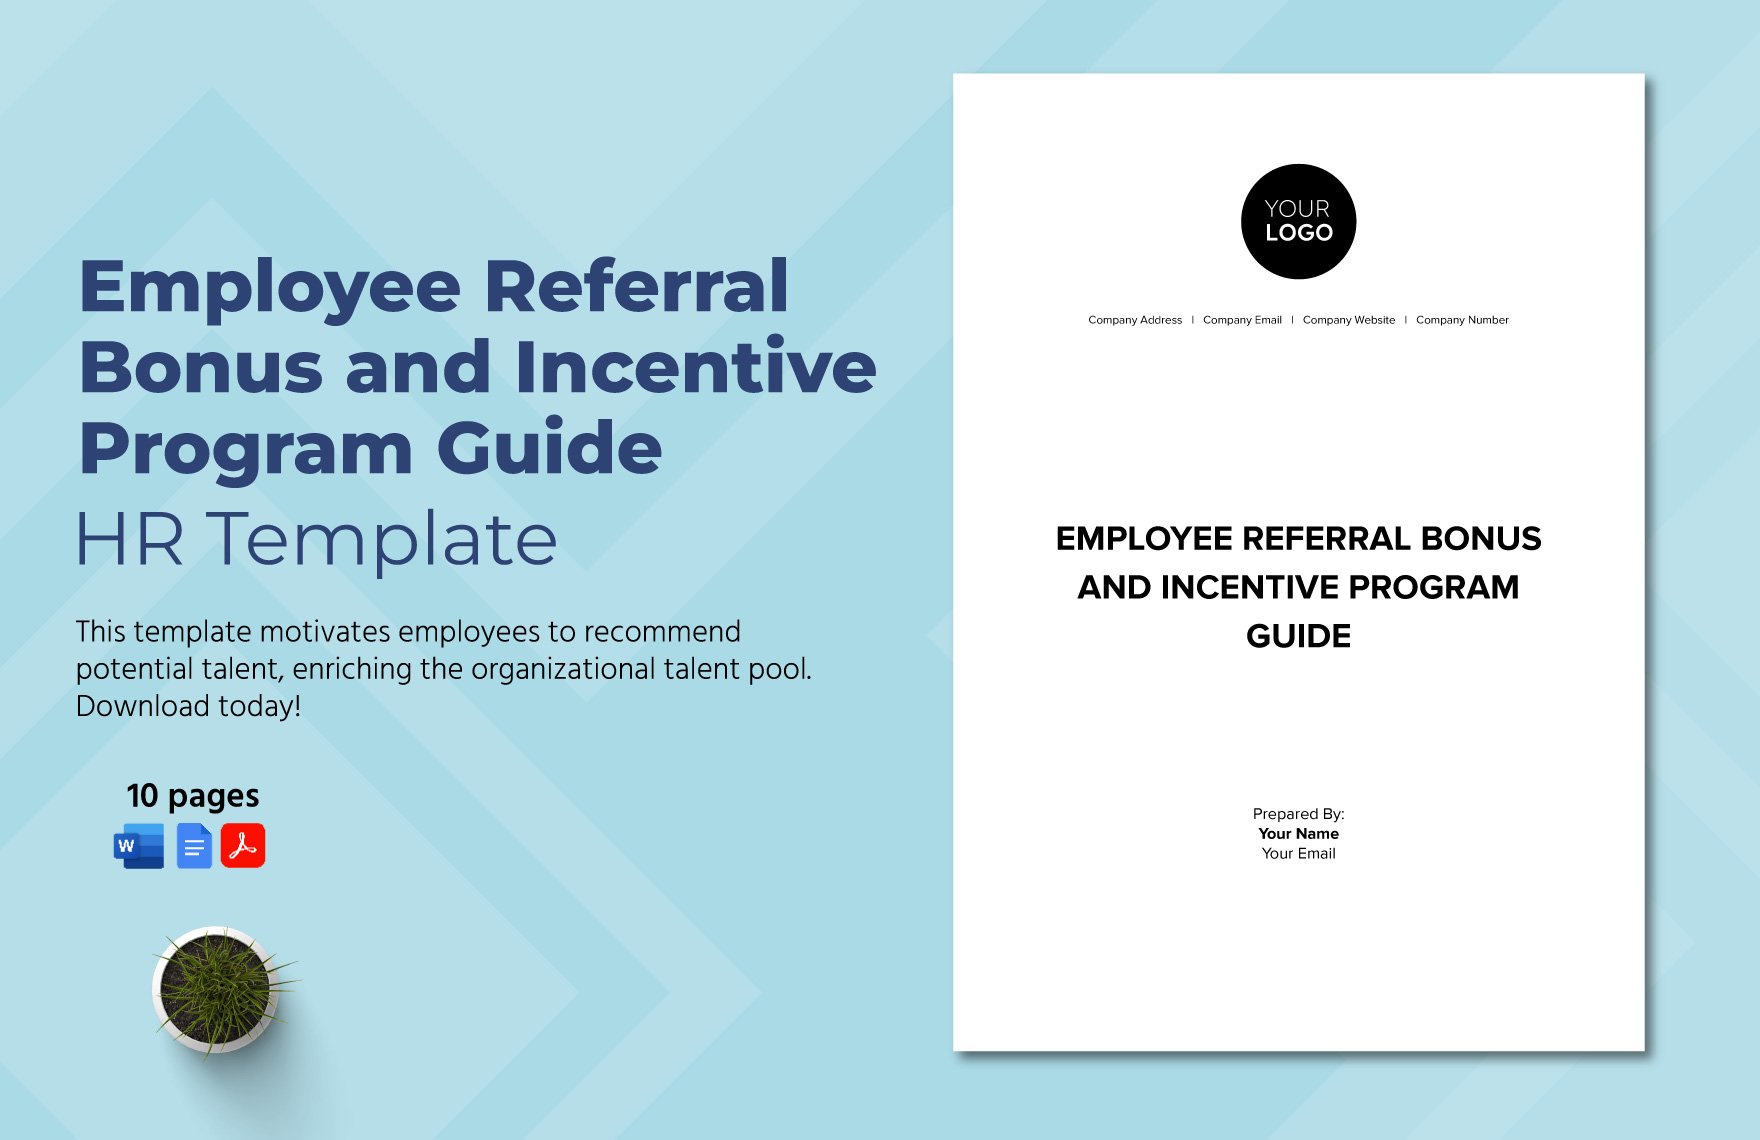 Employee Referral Bonus and Incentive Program Guide HR Template